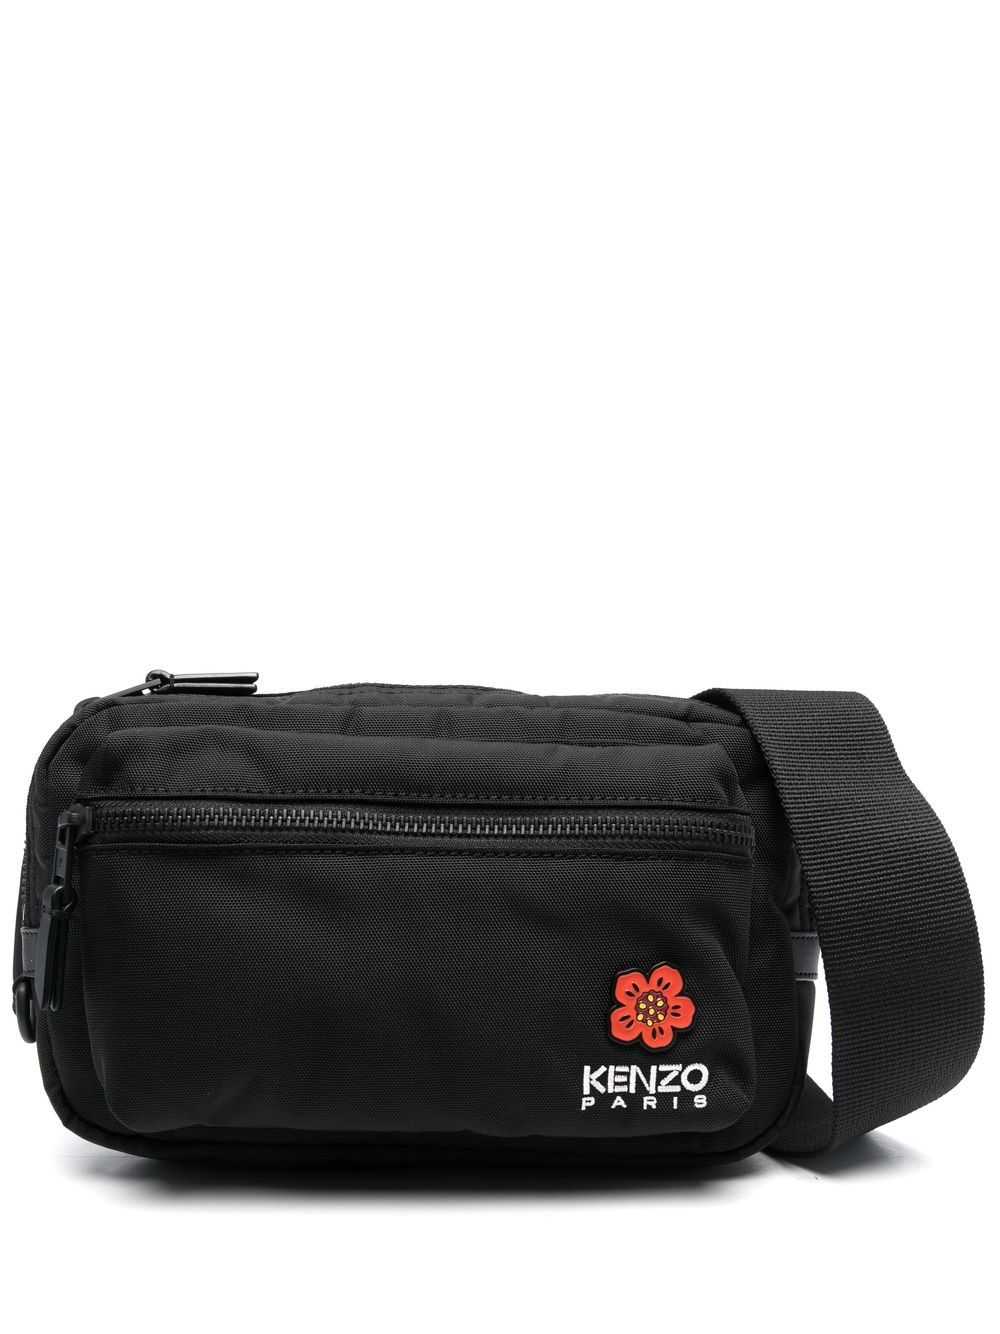 Kenzo Boke Flower Belt Bag